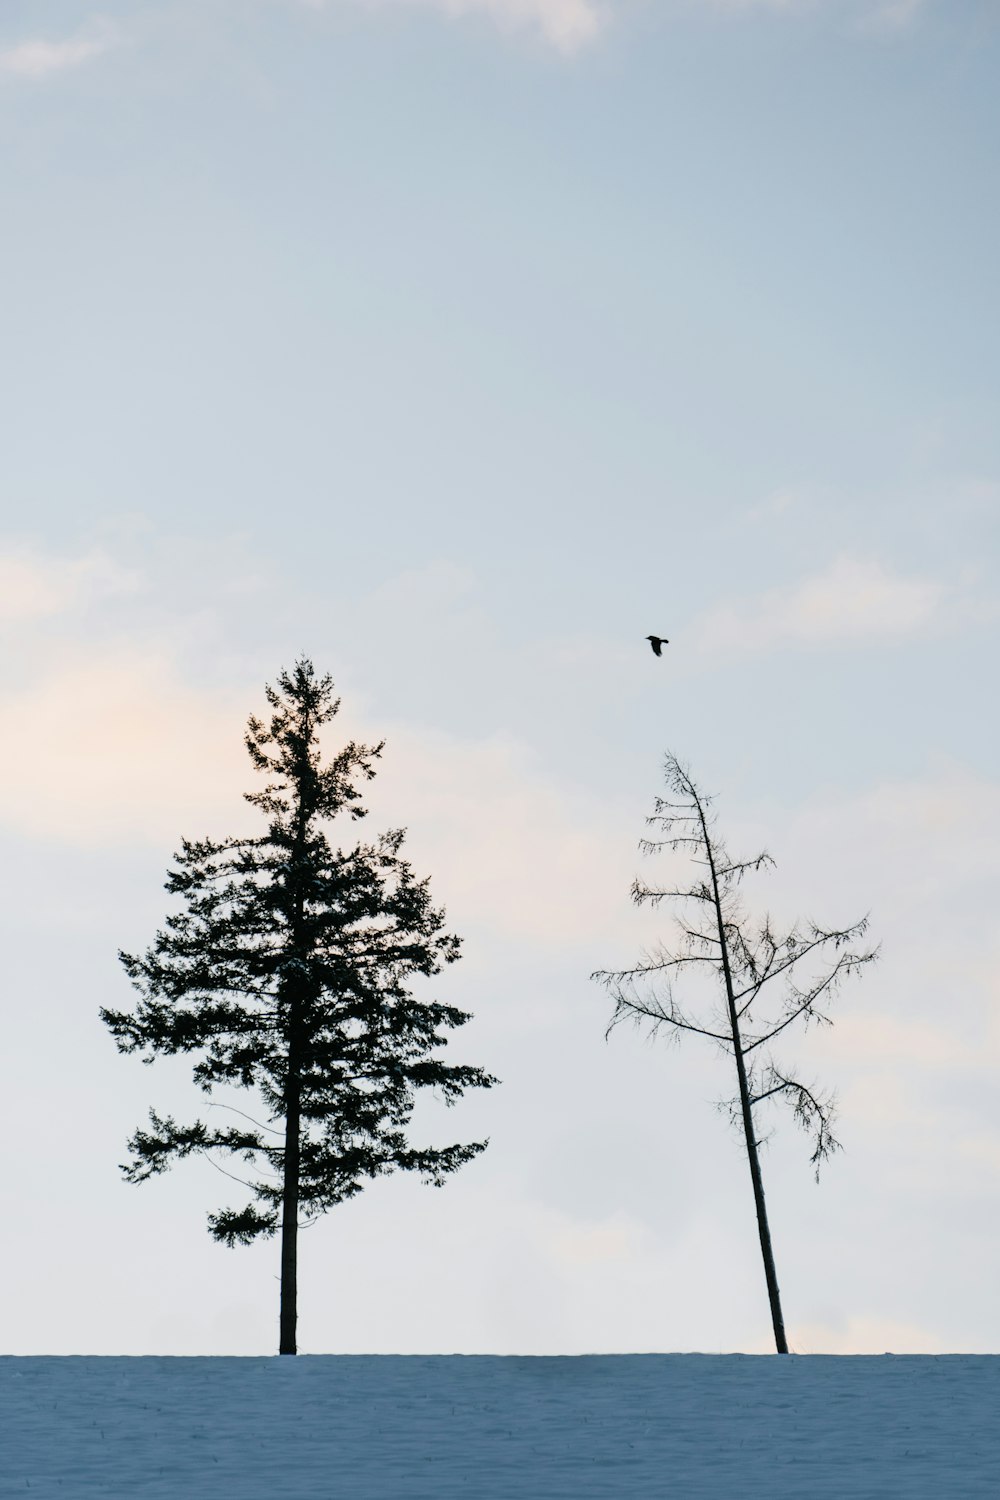 pássaro voando sobre árvores verdes durante o dia